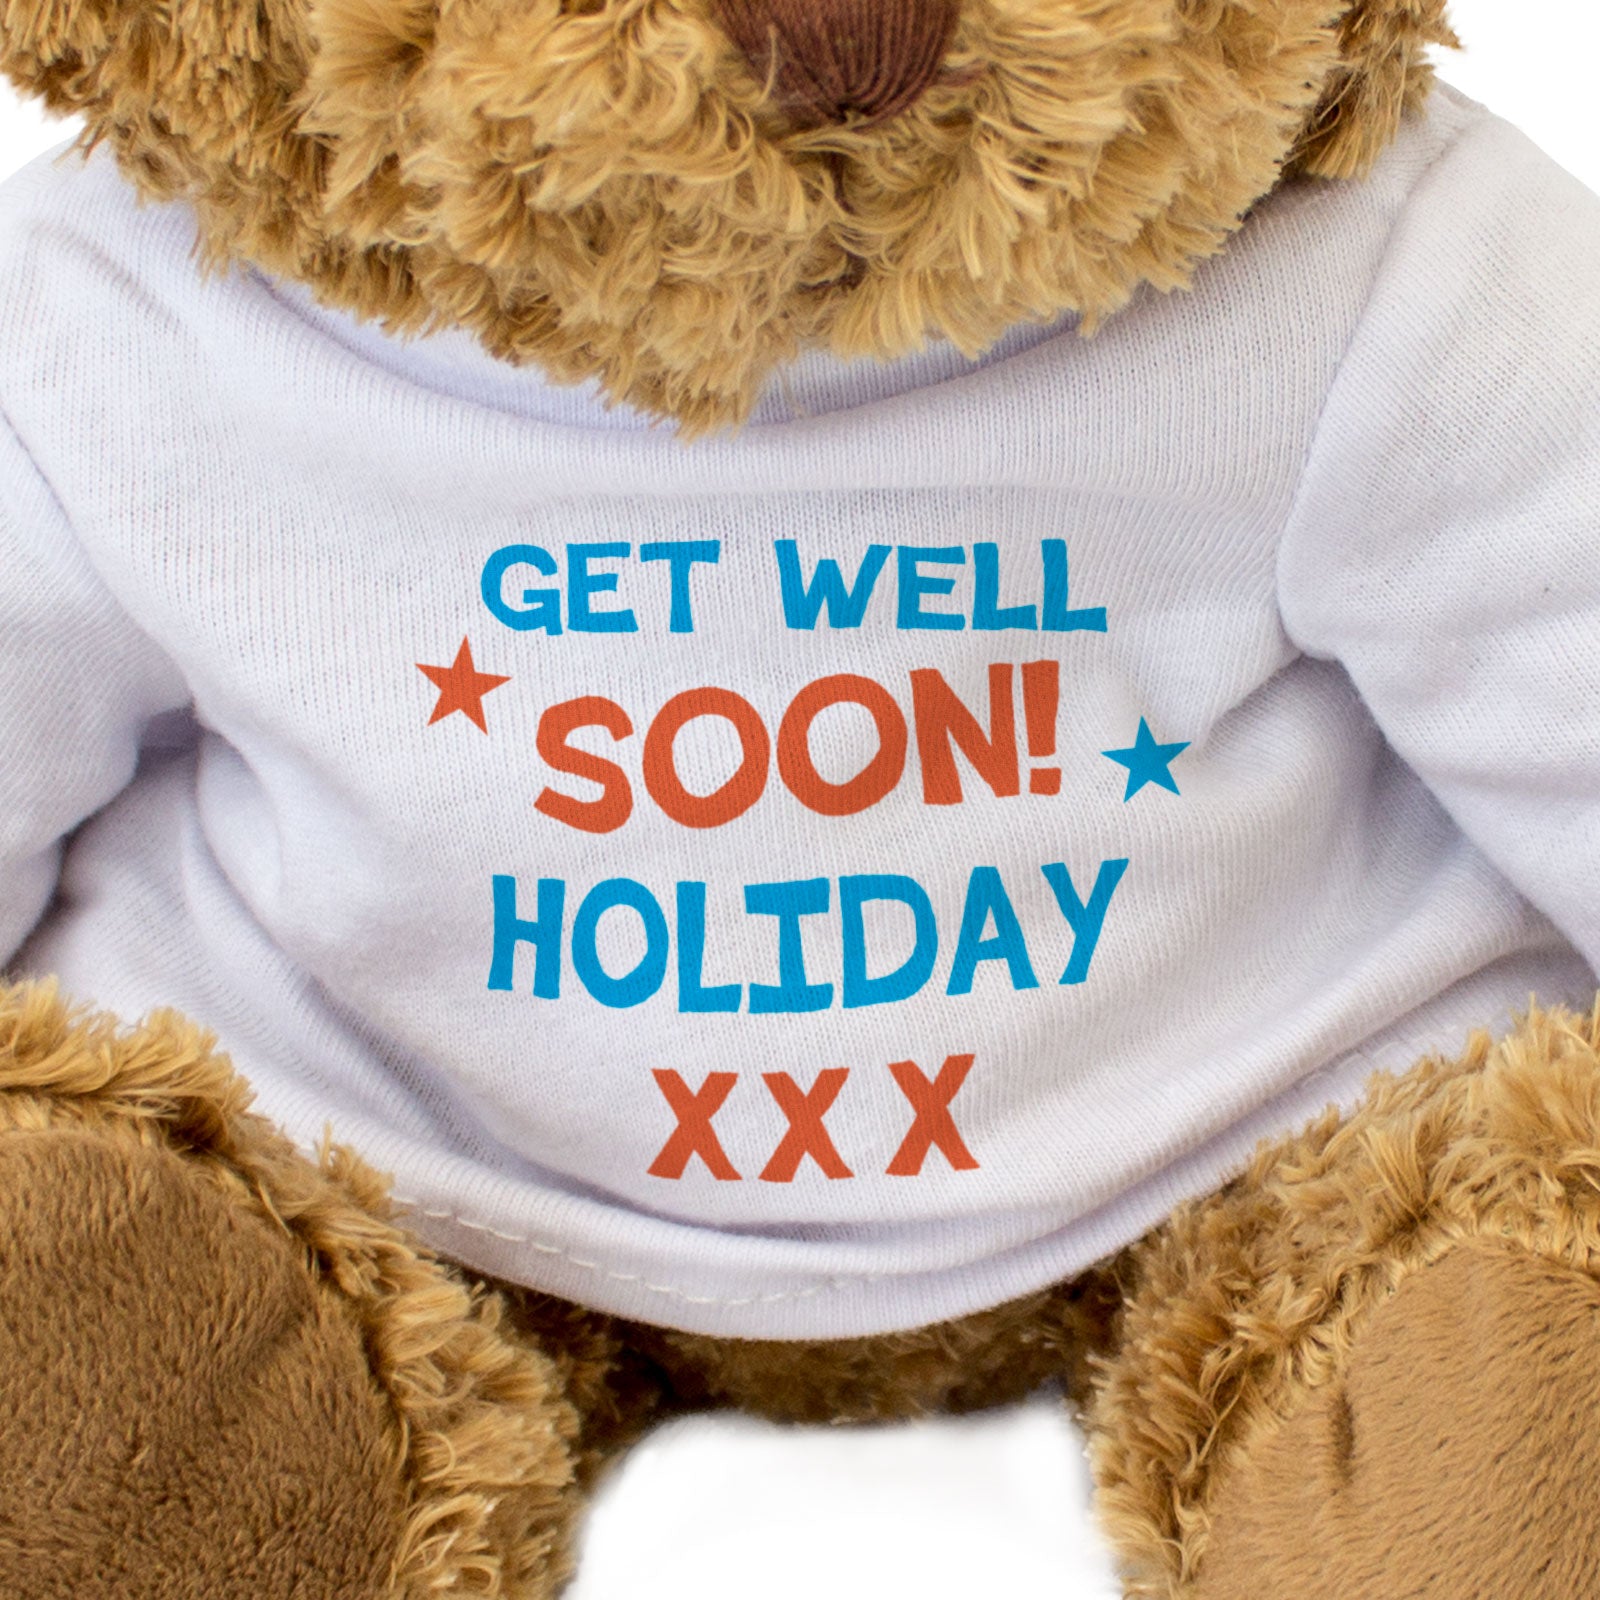 Get Well Soon Holiday - Teddy Bear